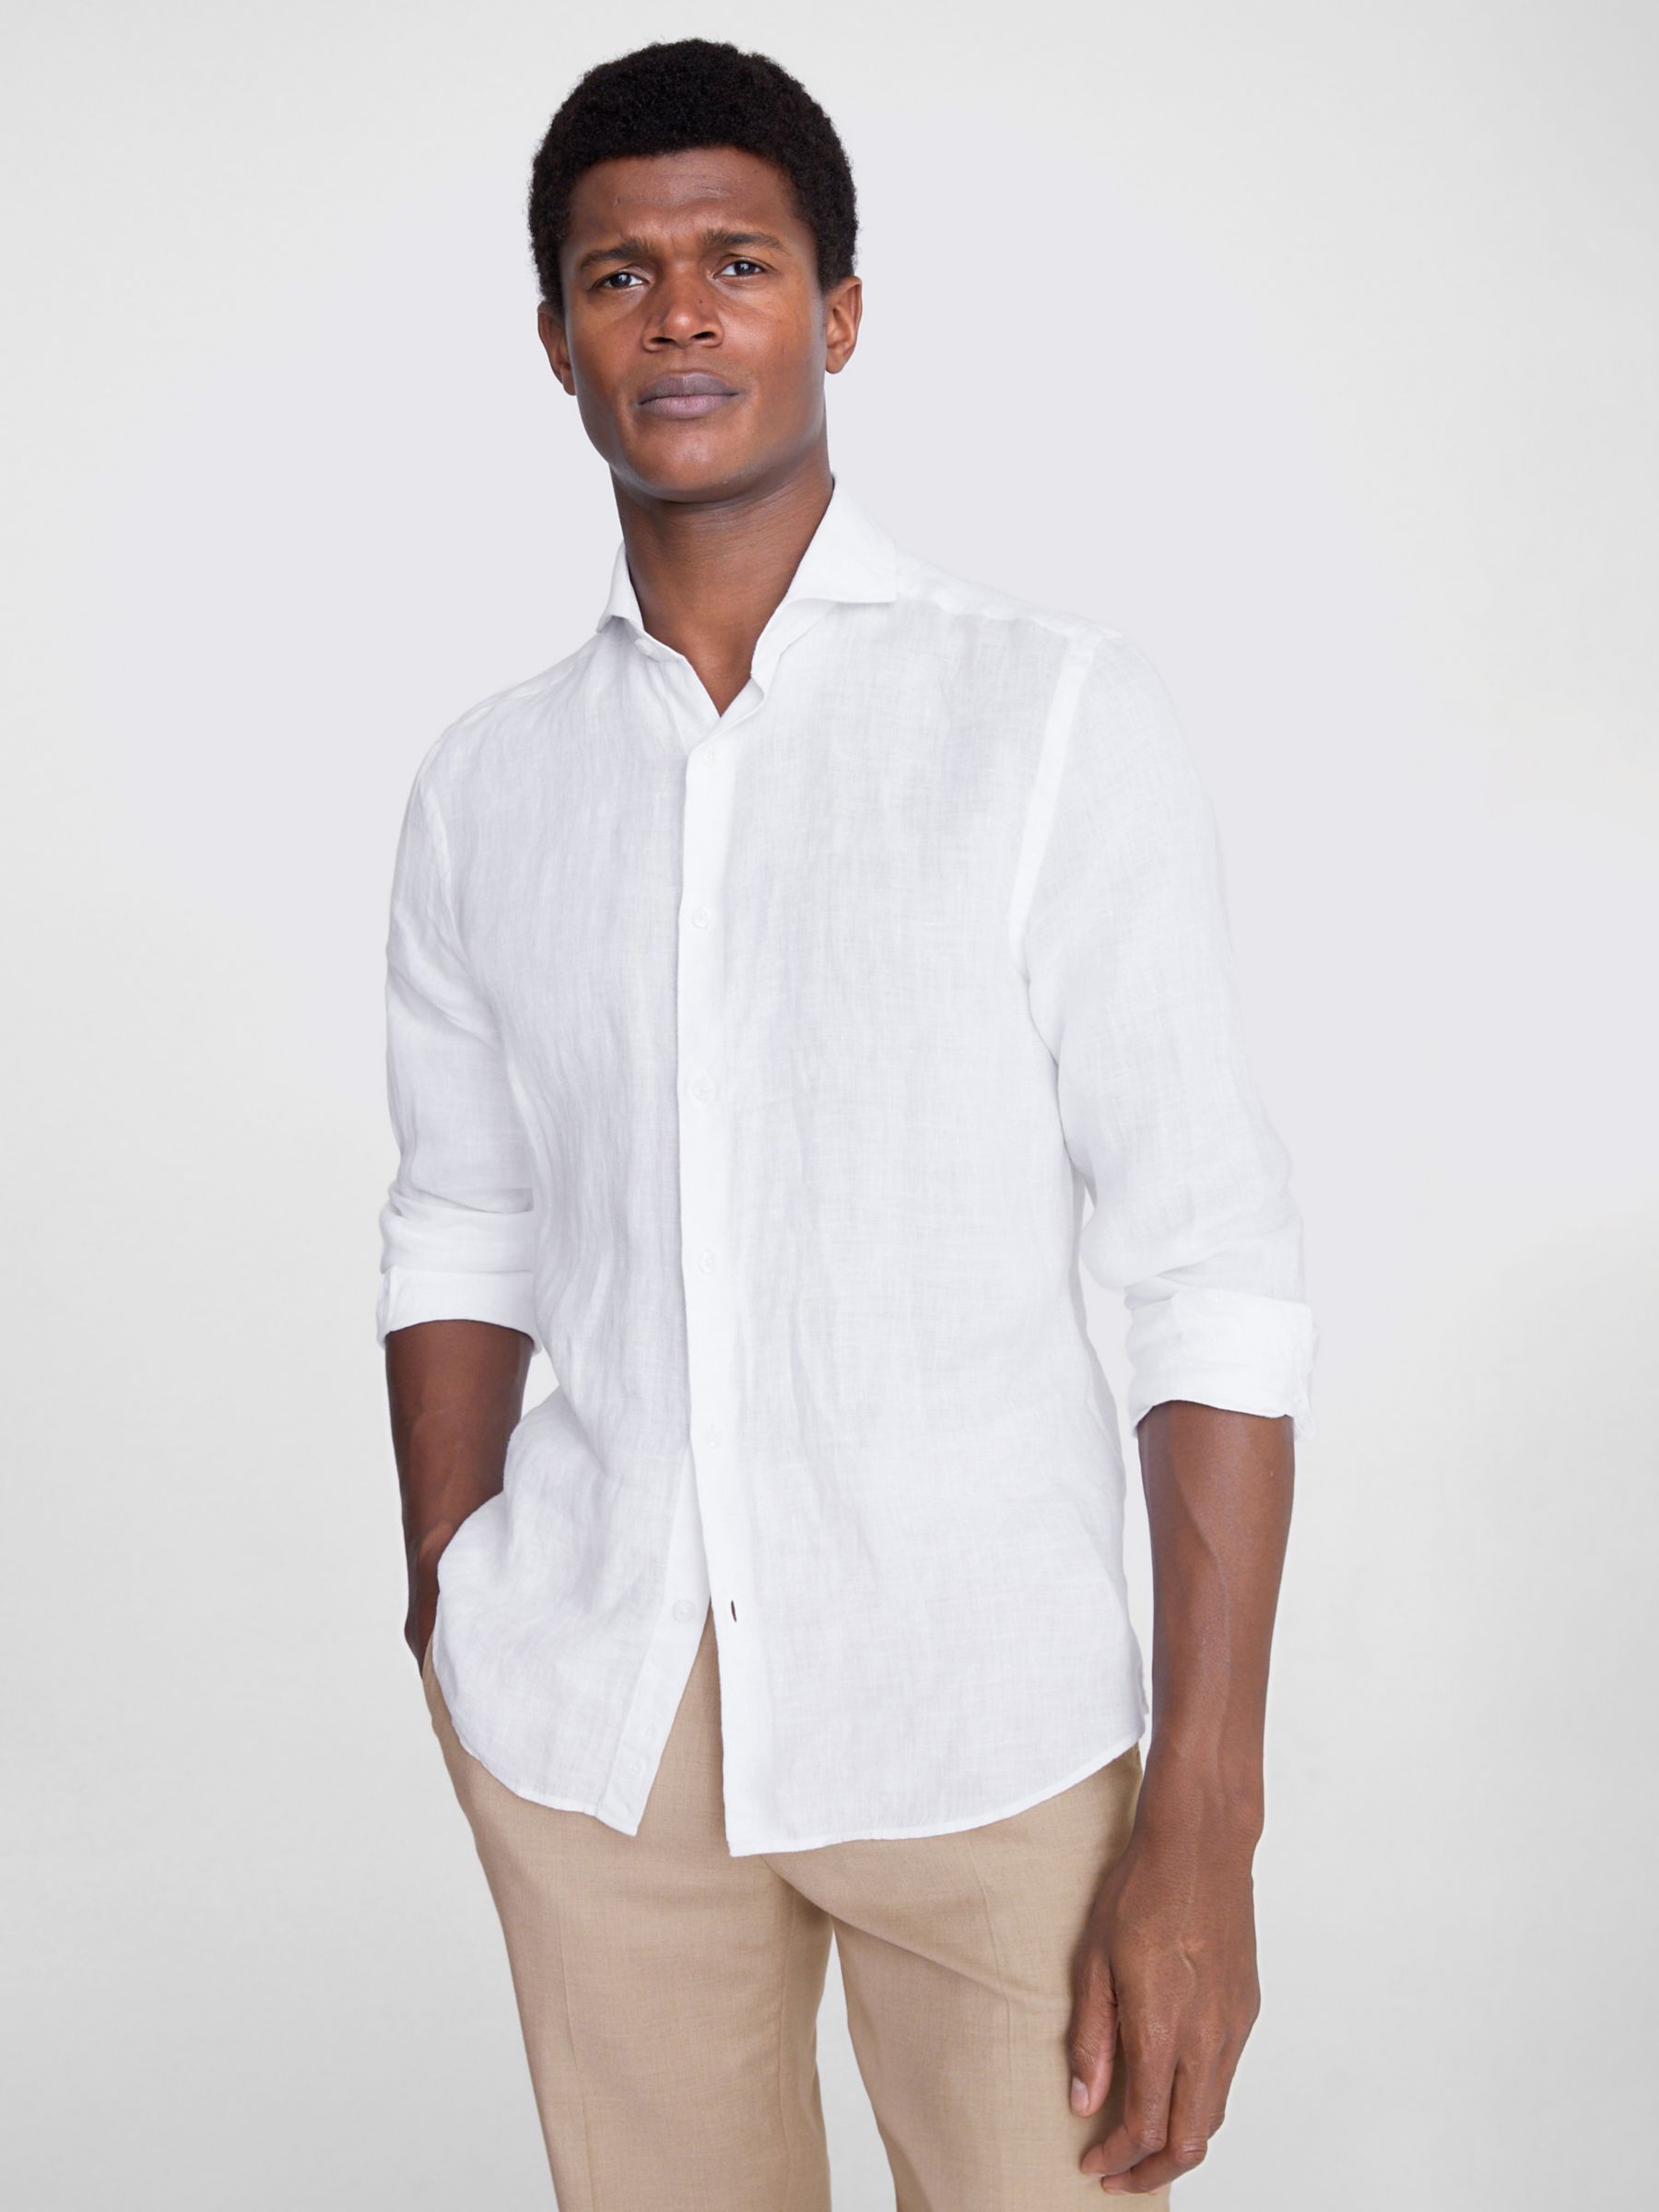 Moss Tailored Fit Linen Long Sleeve Shirt, White, S